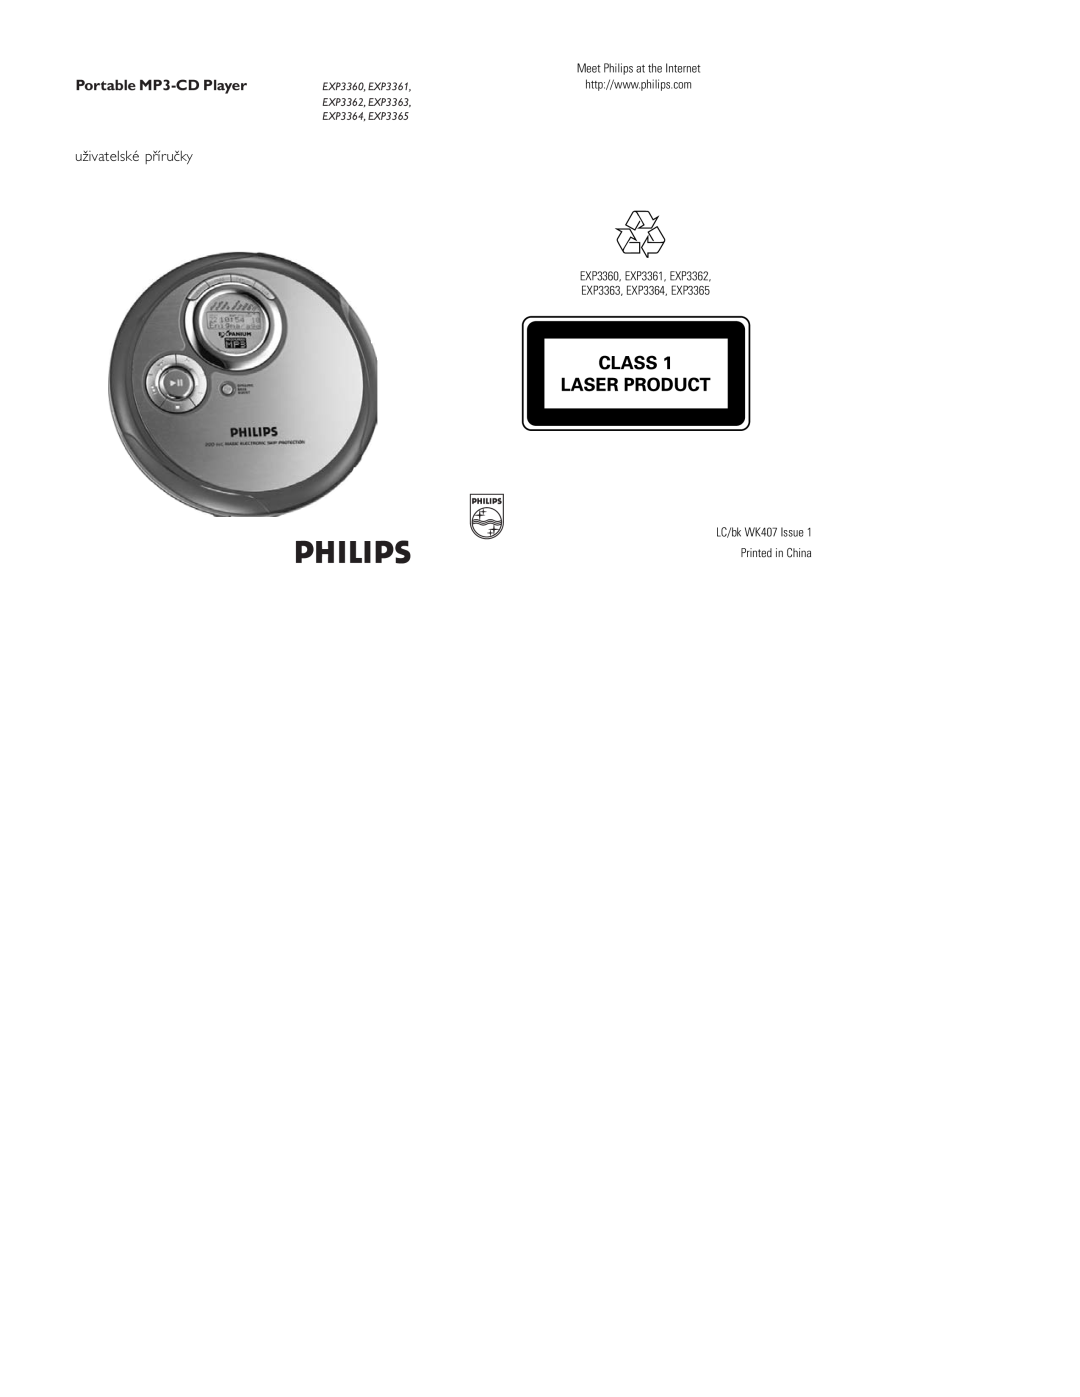 Philips manual Portable MP3-CDPlayer, uživatelské příručky, EXP3360, EXP3361, EXP3362, EXP3363, EXP3364, EXP3365 